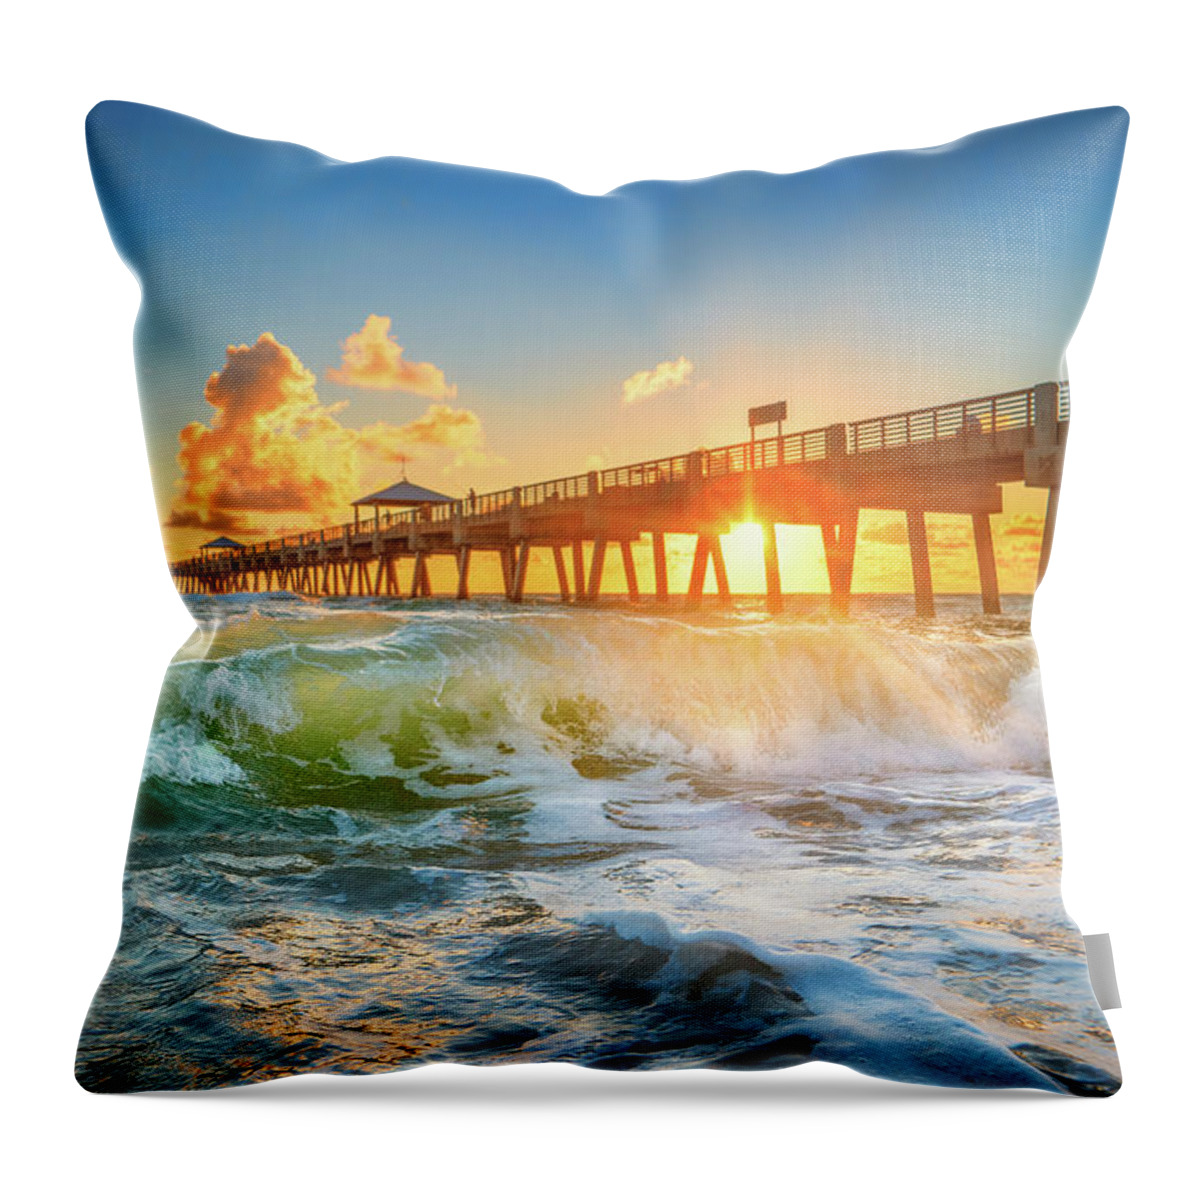 Juno Beach Pier Throw Pillow featuring the photograph Juno Beach Pier Wave by Kim Seng